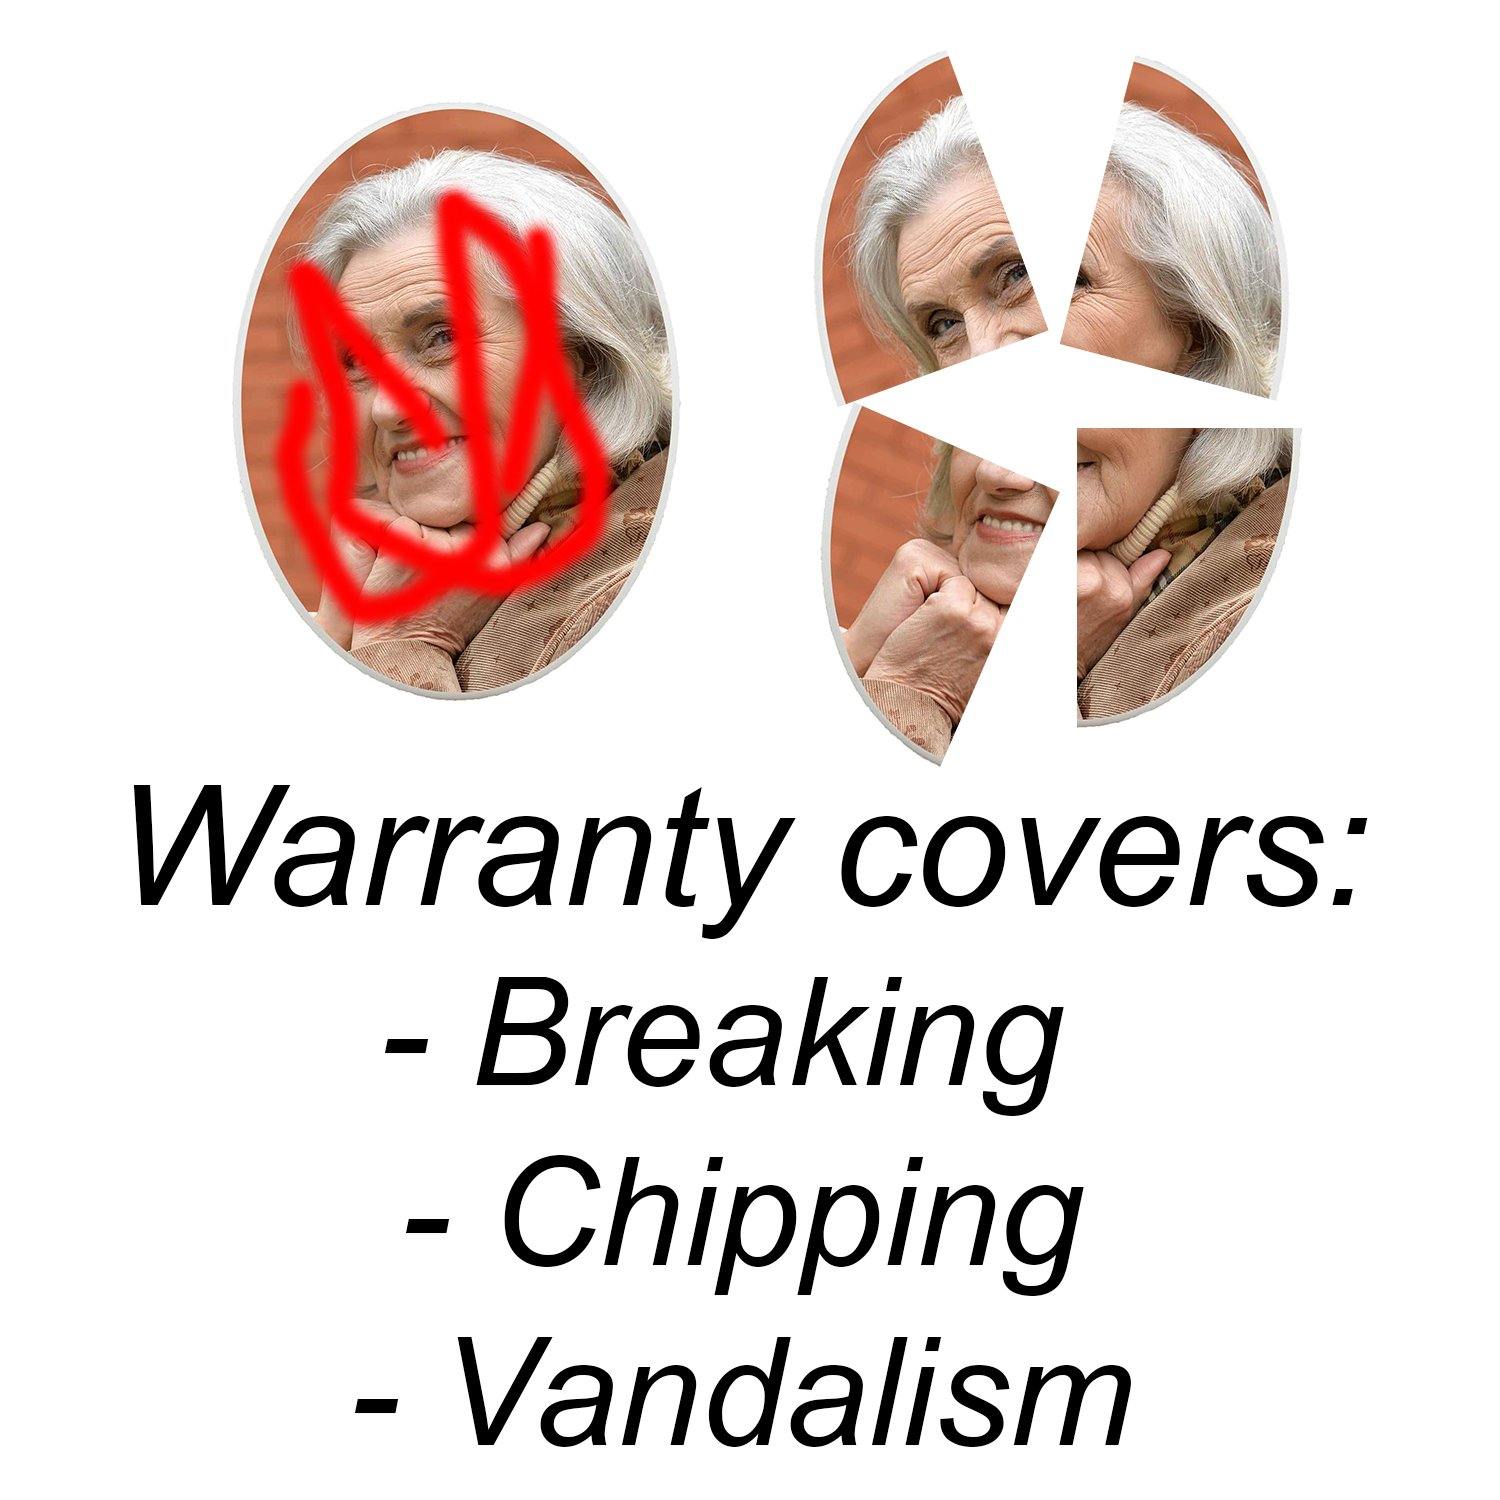 20-Year Comprehensive Warranty - Under $200 - MemorialPics LLC (PhotosForHeadstones.com)